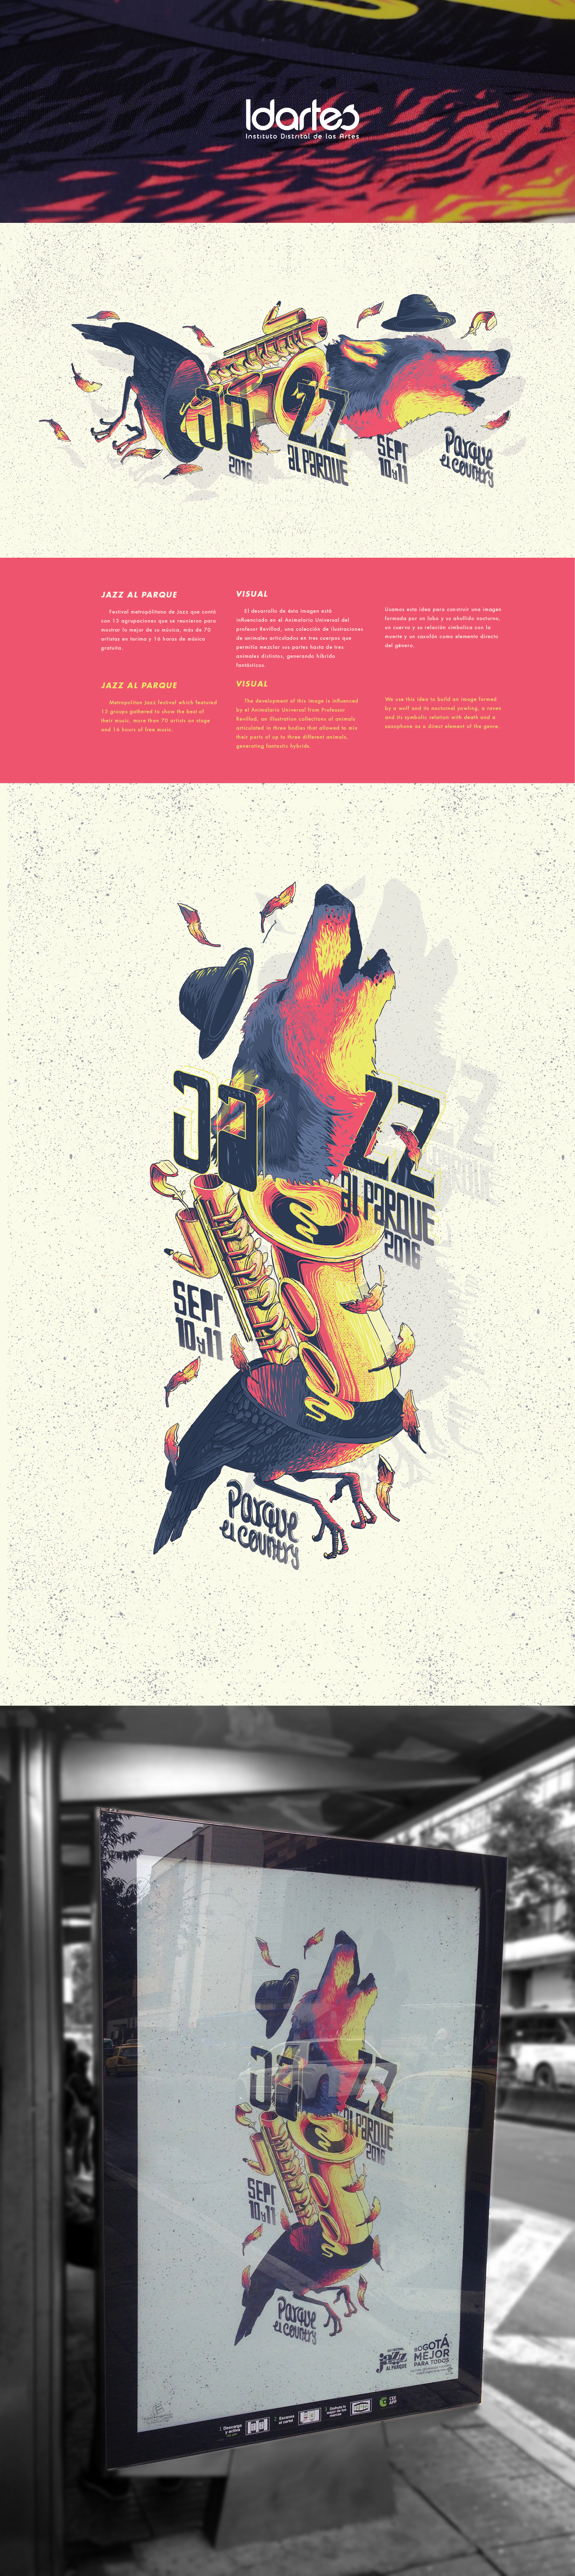 jazz musica festival ilustracion dibujo Digital Art  bogota colombia idartes Ataul